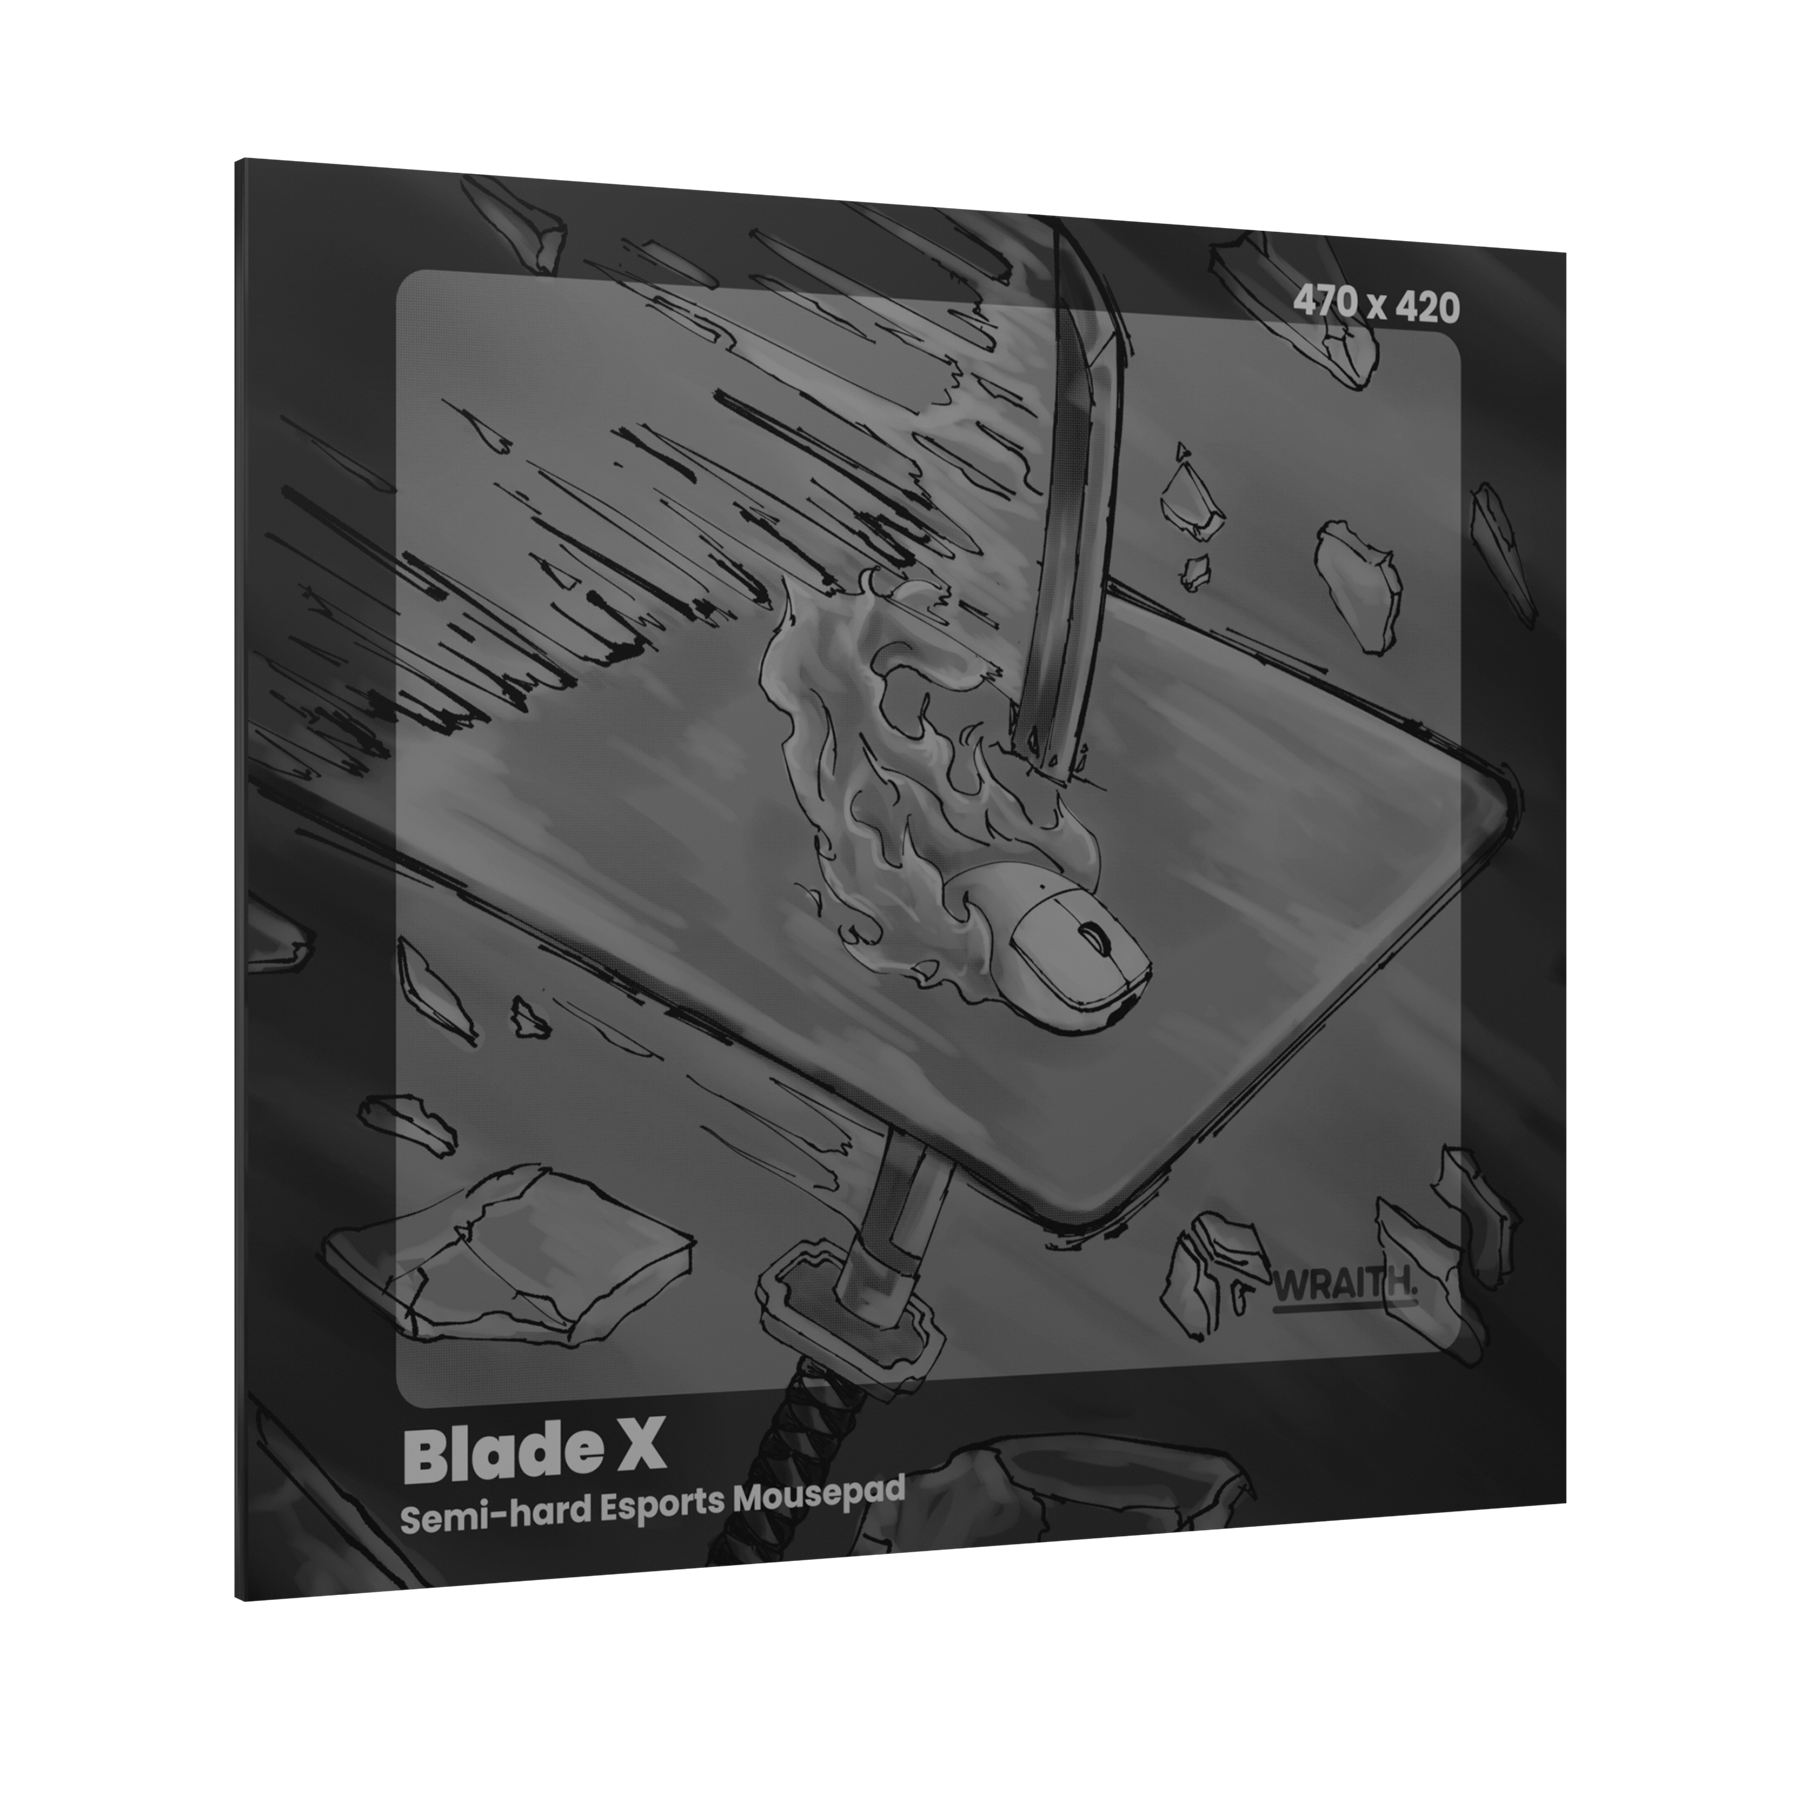 Wraith Blade X Semi-hard Mousepad